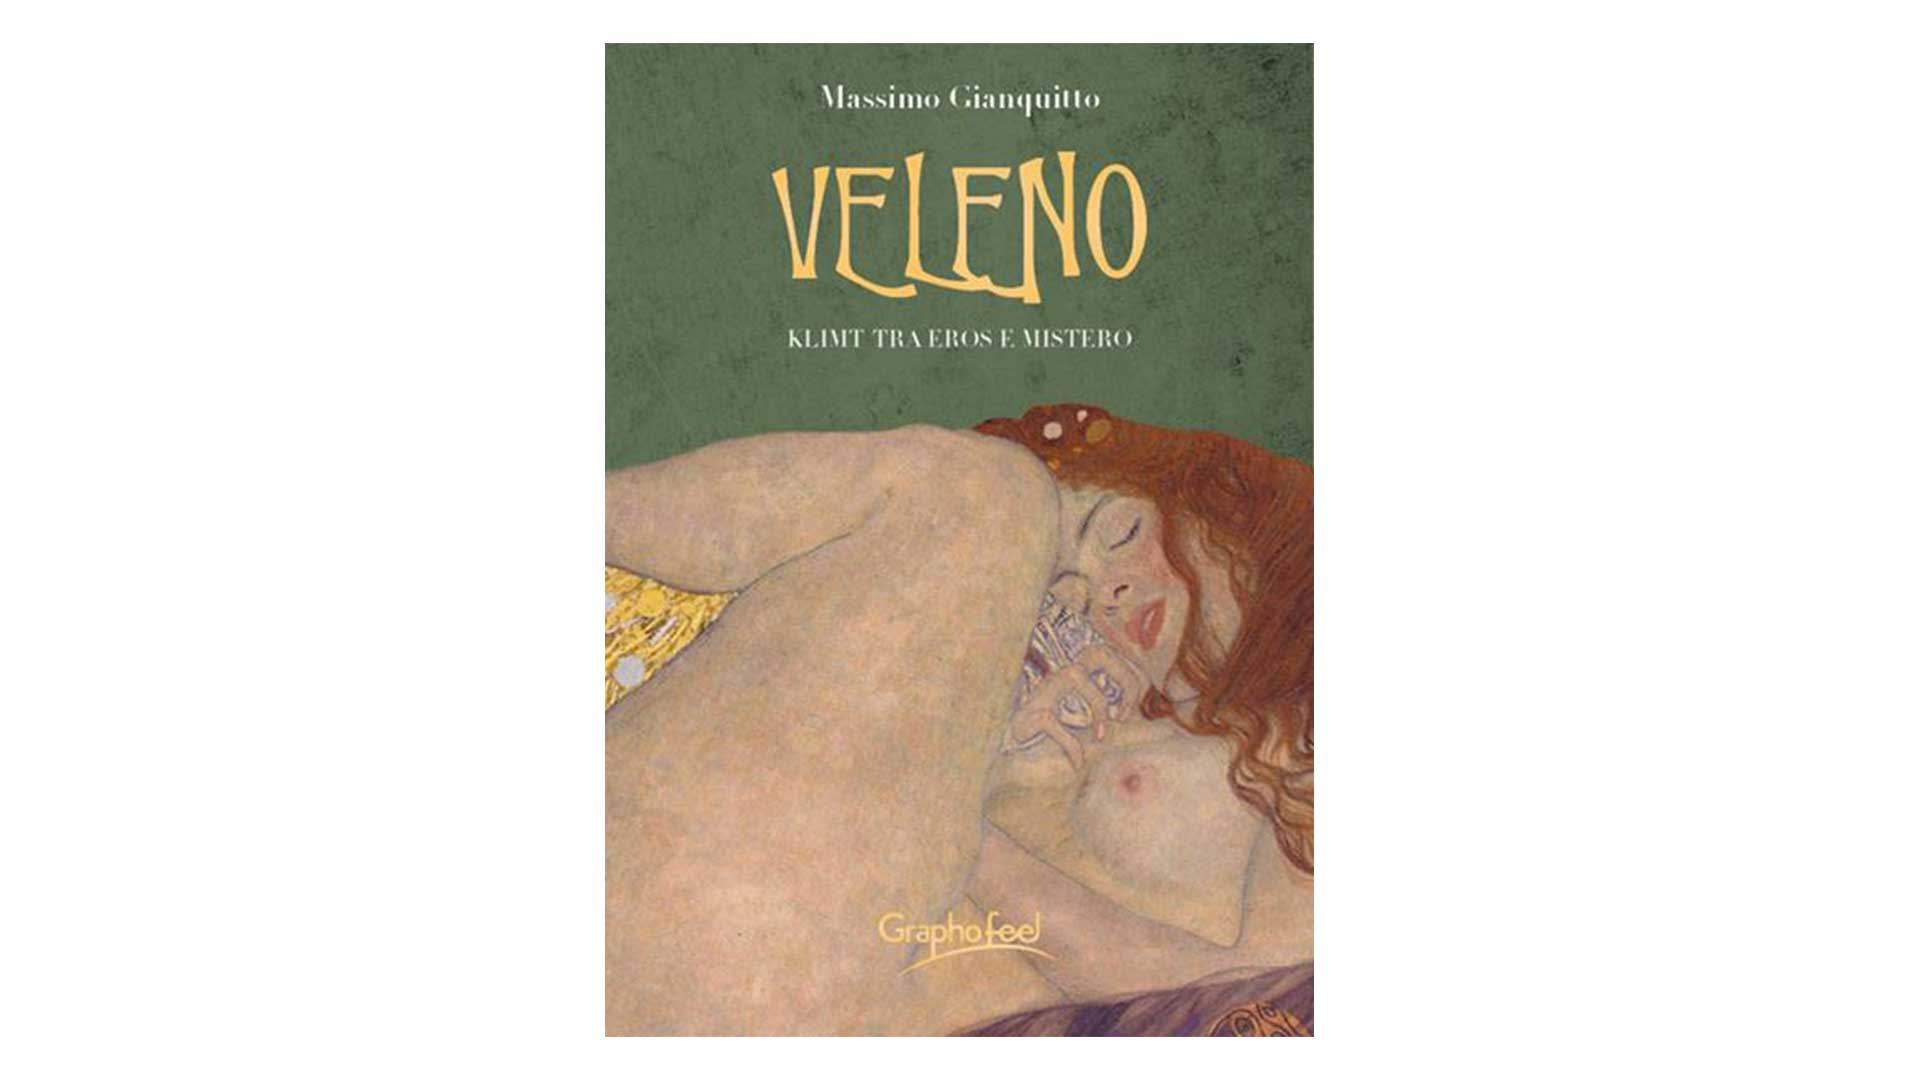 Veleno-Klimt-tra-eros-e-mistero-libri-ferie-Level-Office-Landscape